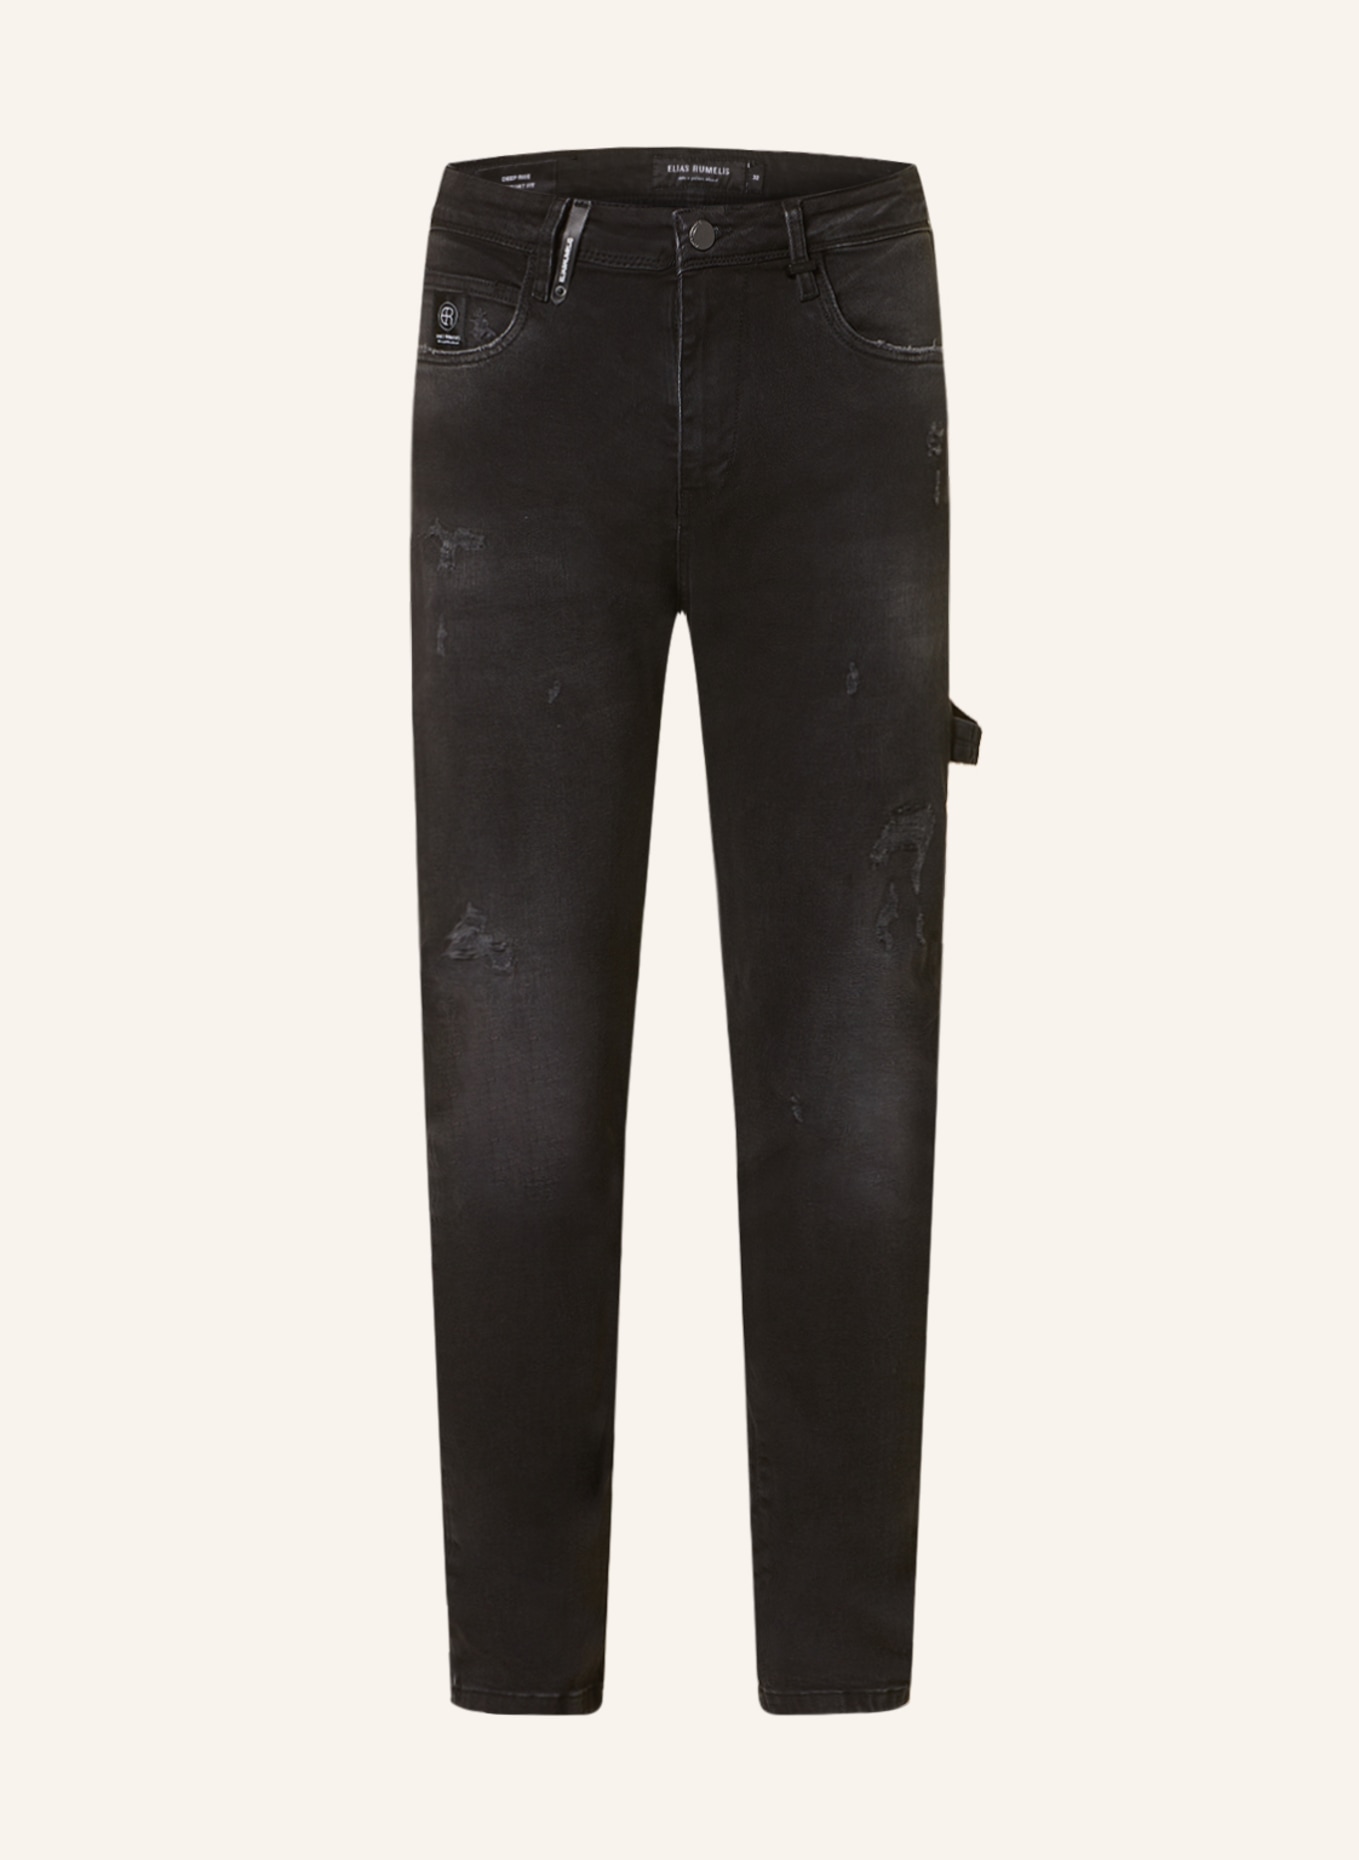 ELIAS RUMELIS Jeans ERJOLANDO Comfort Fit, Farbe: 754 Offshore Black (Bild 1)